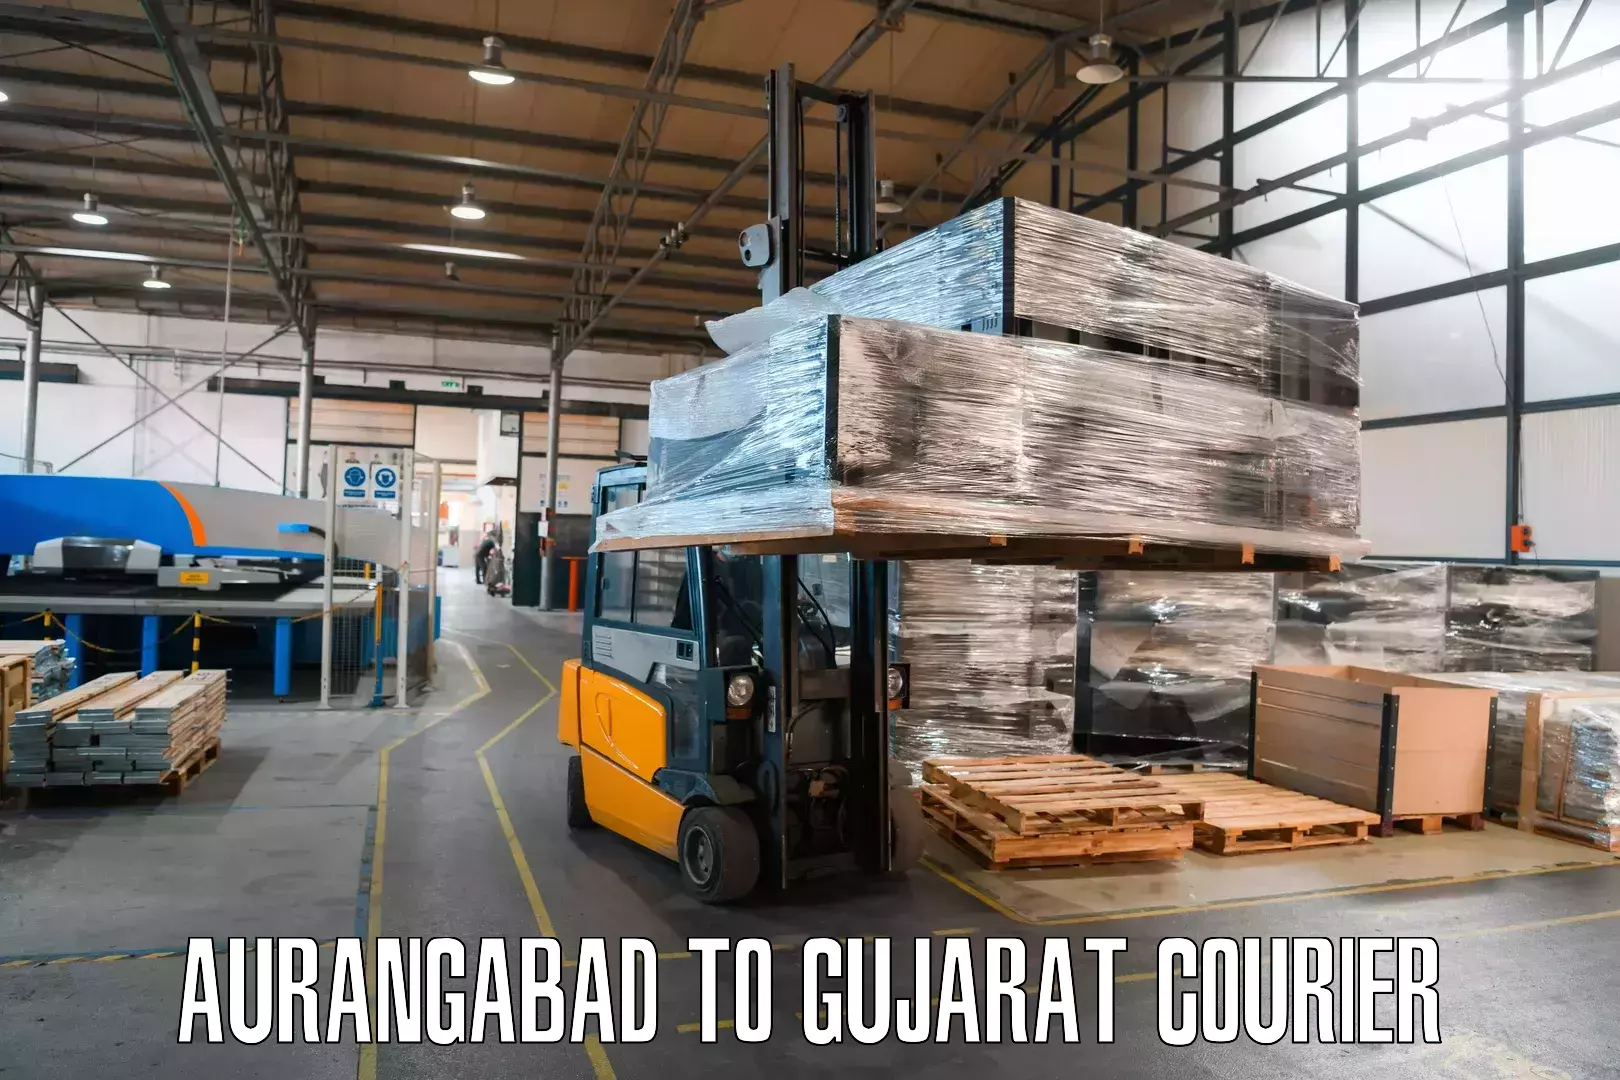 Courier service comparison Aurangabad to Mahemdavad